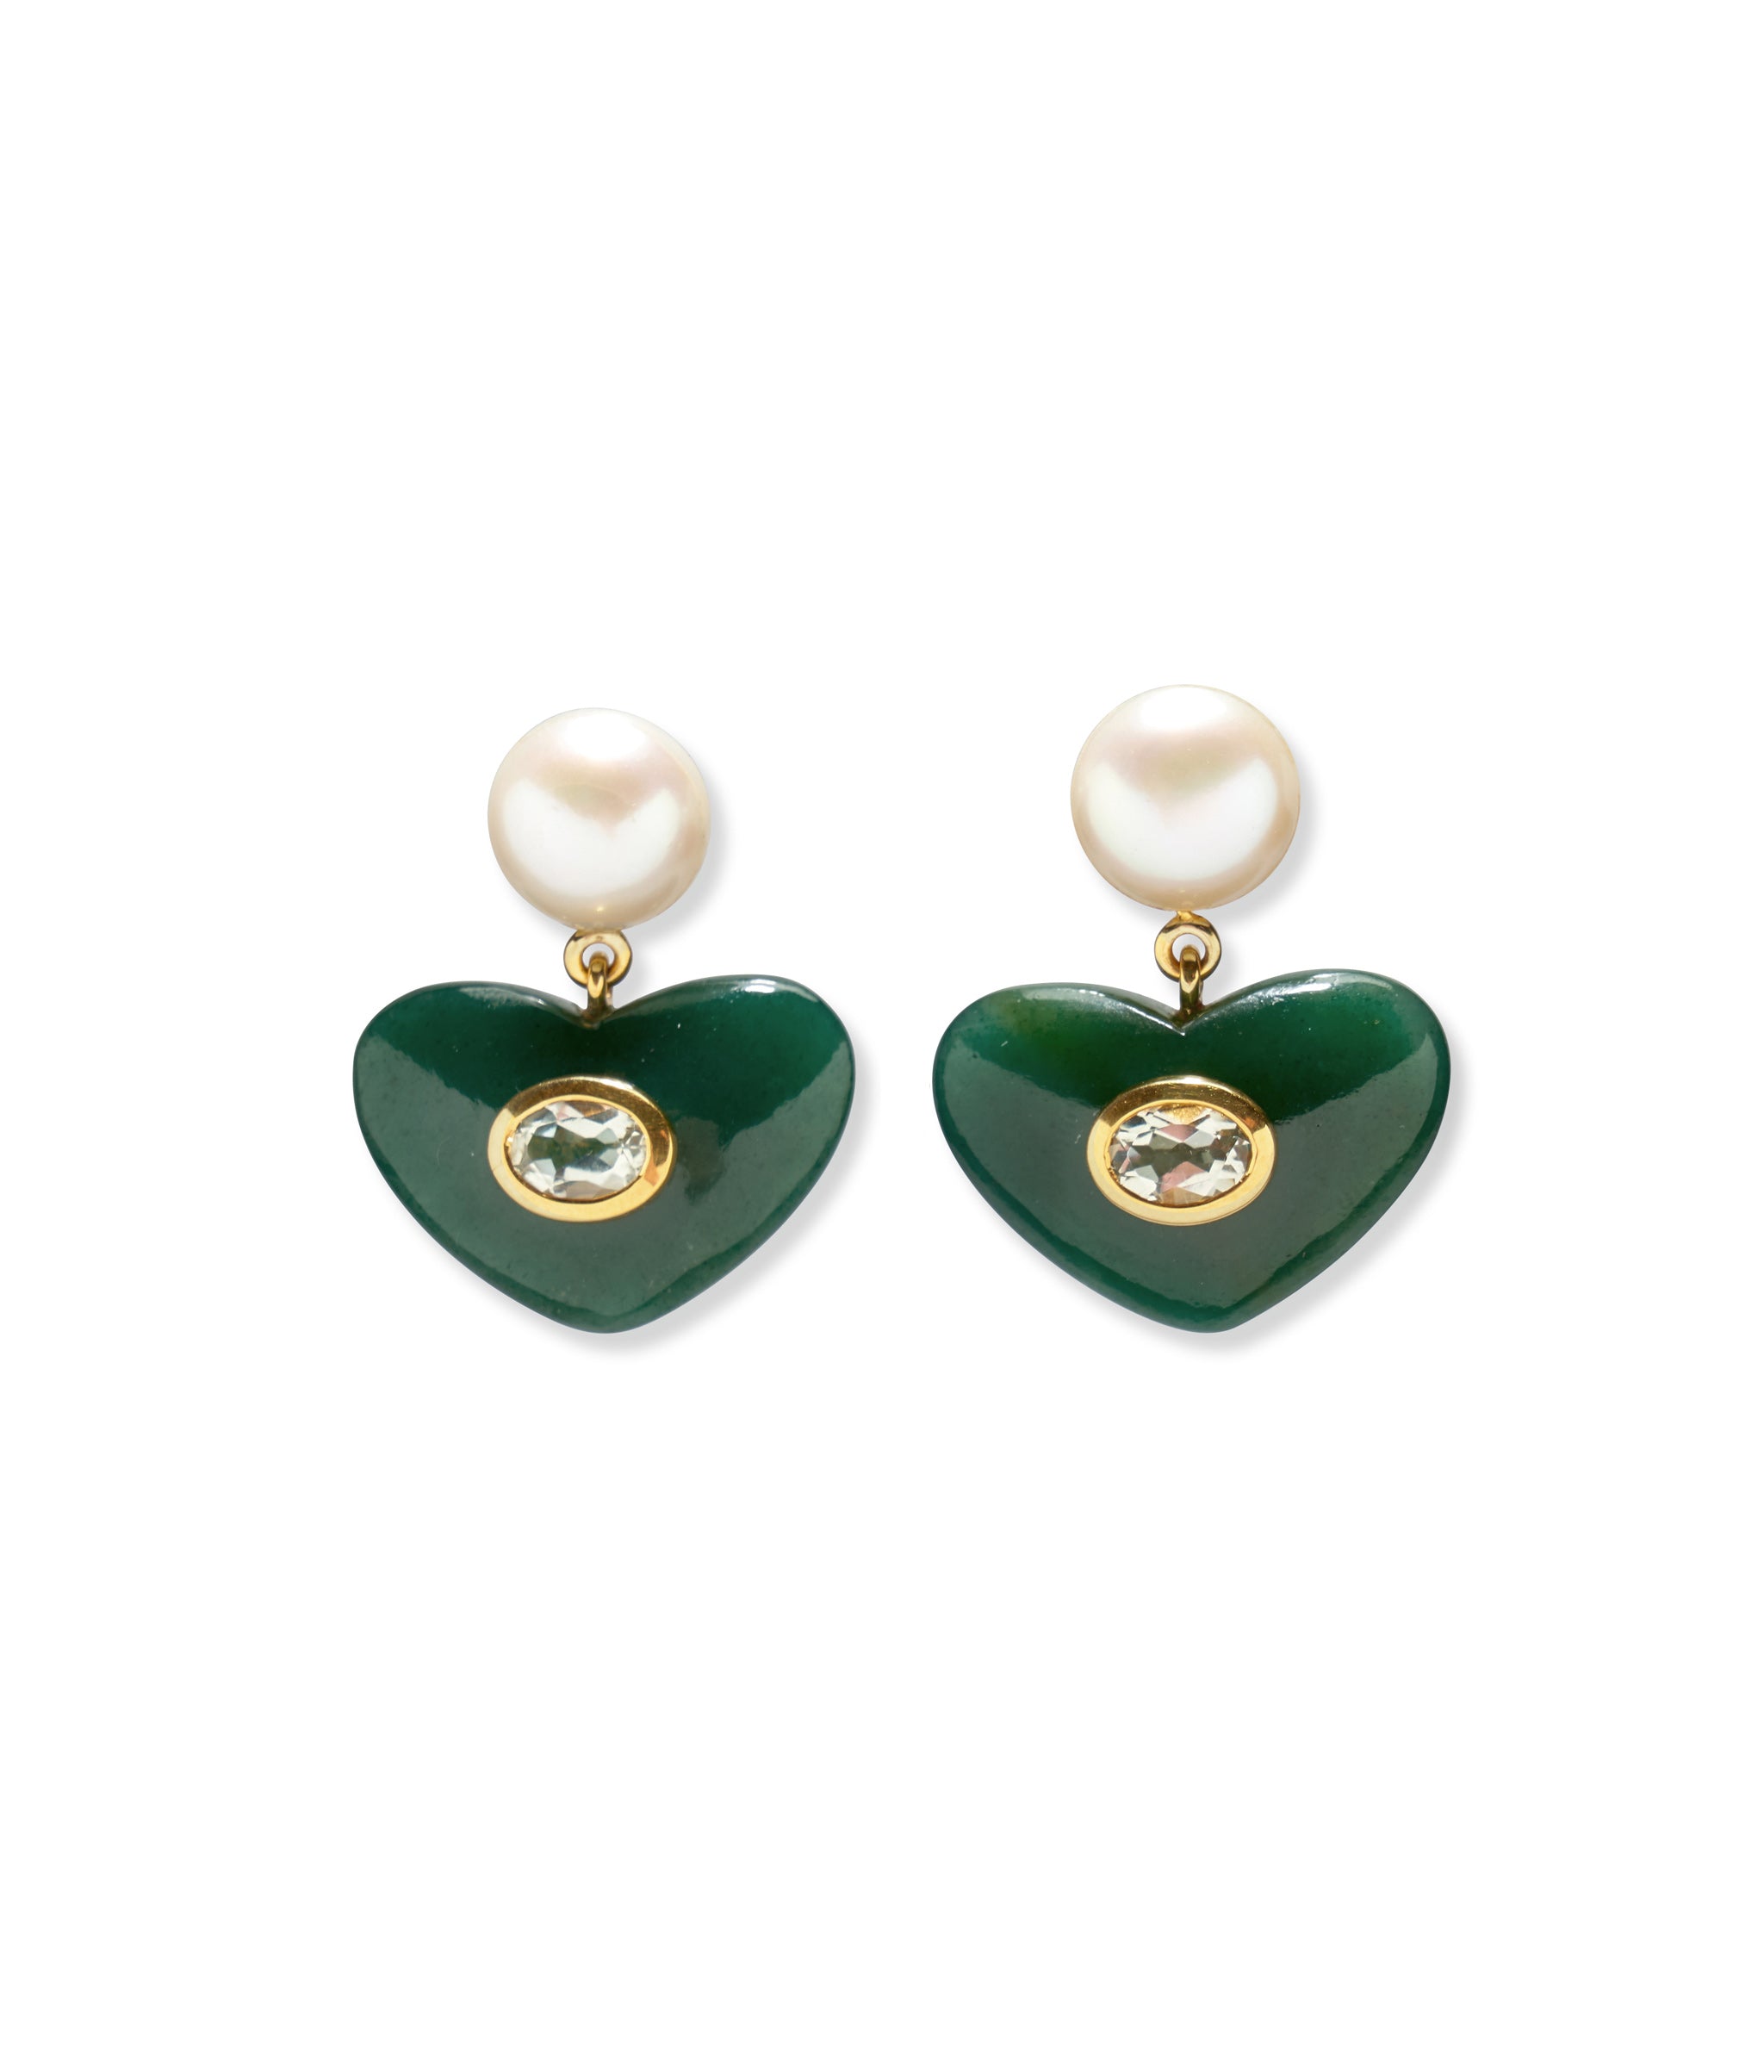 Enamored Earrings in Jade. Large freshwater pearl tops, jade heart drops with faceted green amethyst stones.